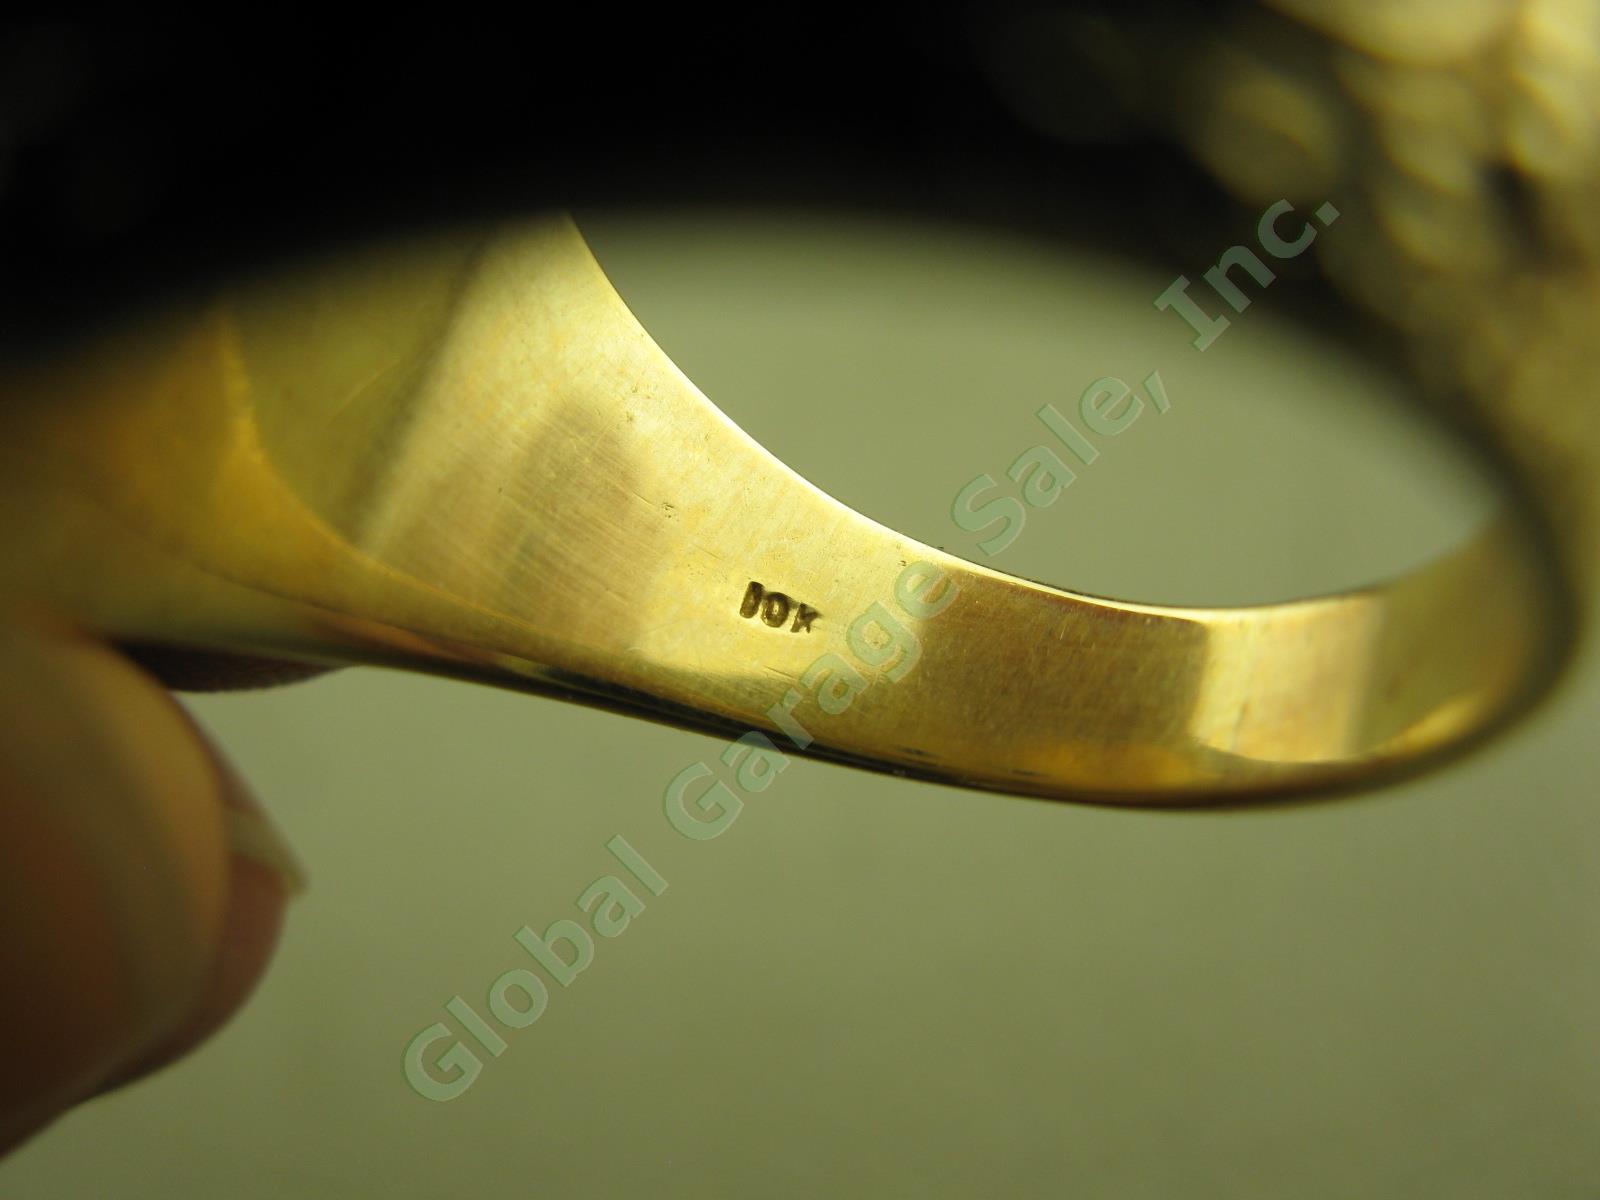 Snap-On Tools Dealer Sales Award 10K Gold Ring W/9 Diamonds 13.8 Gram Size 10.75 5